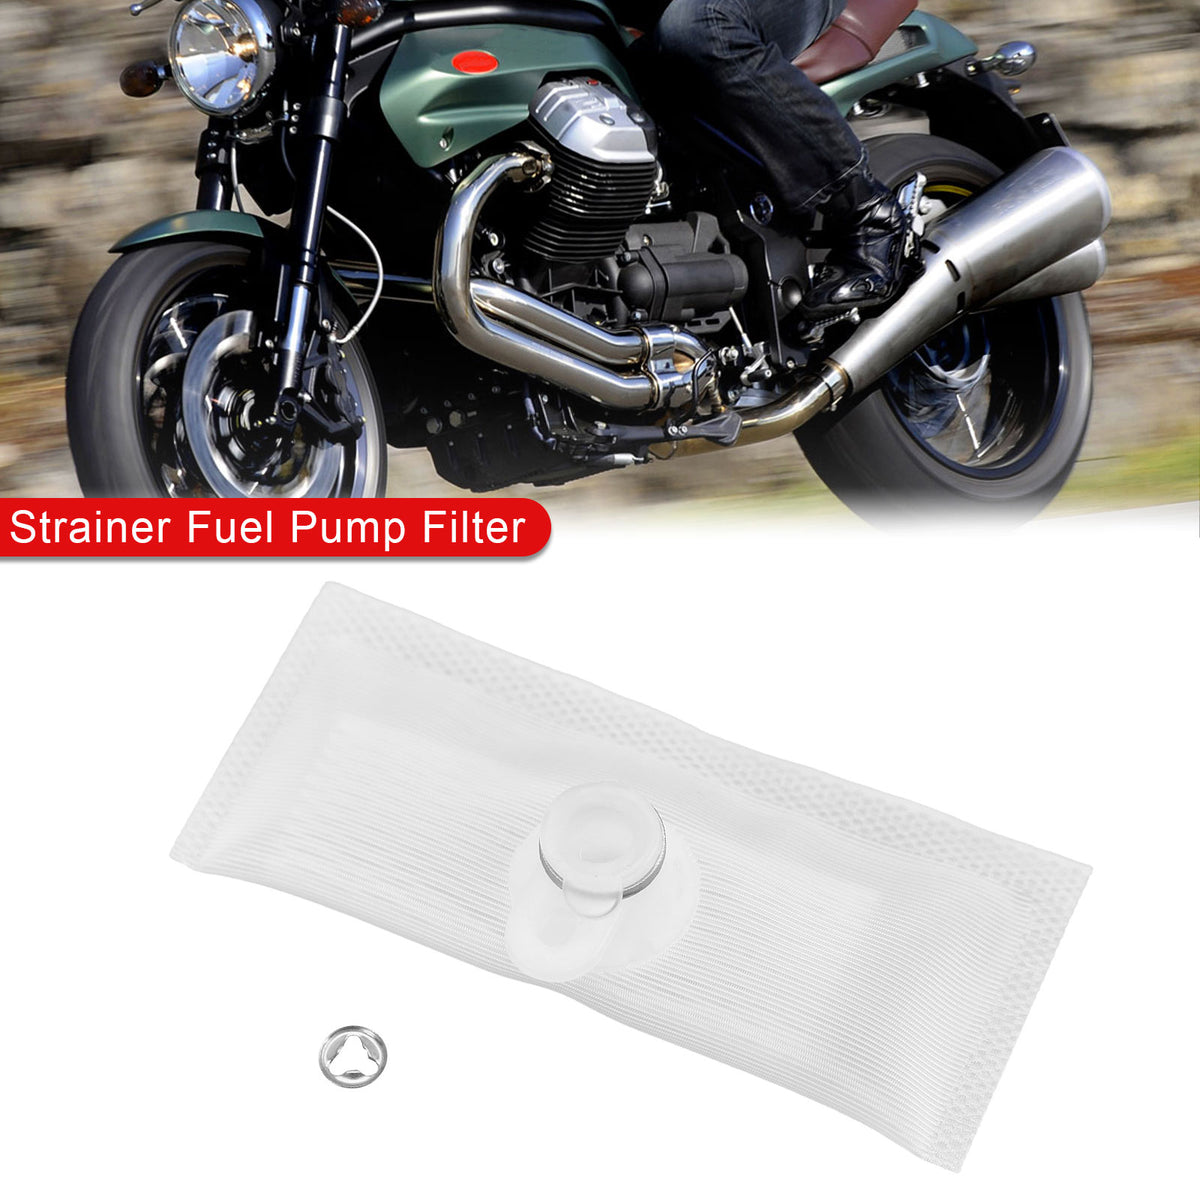 Strainer fuel pump filter for Ducati Monster Hypermotard Guzzi Shiver Dorsoduro